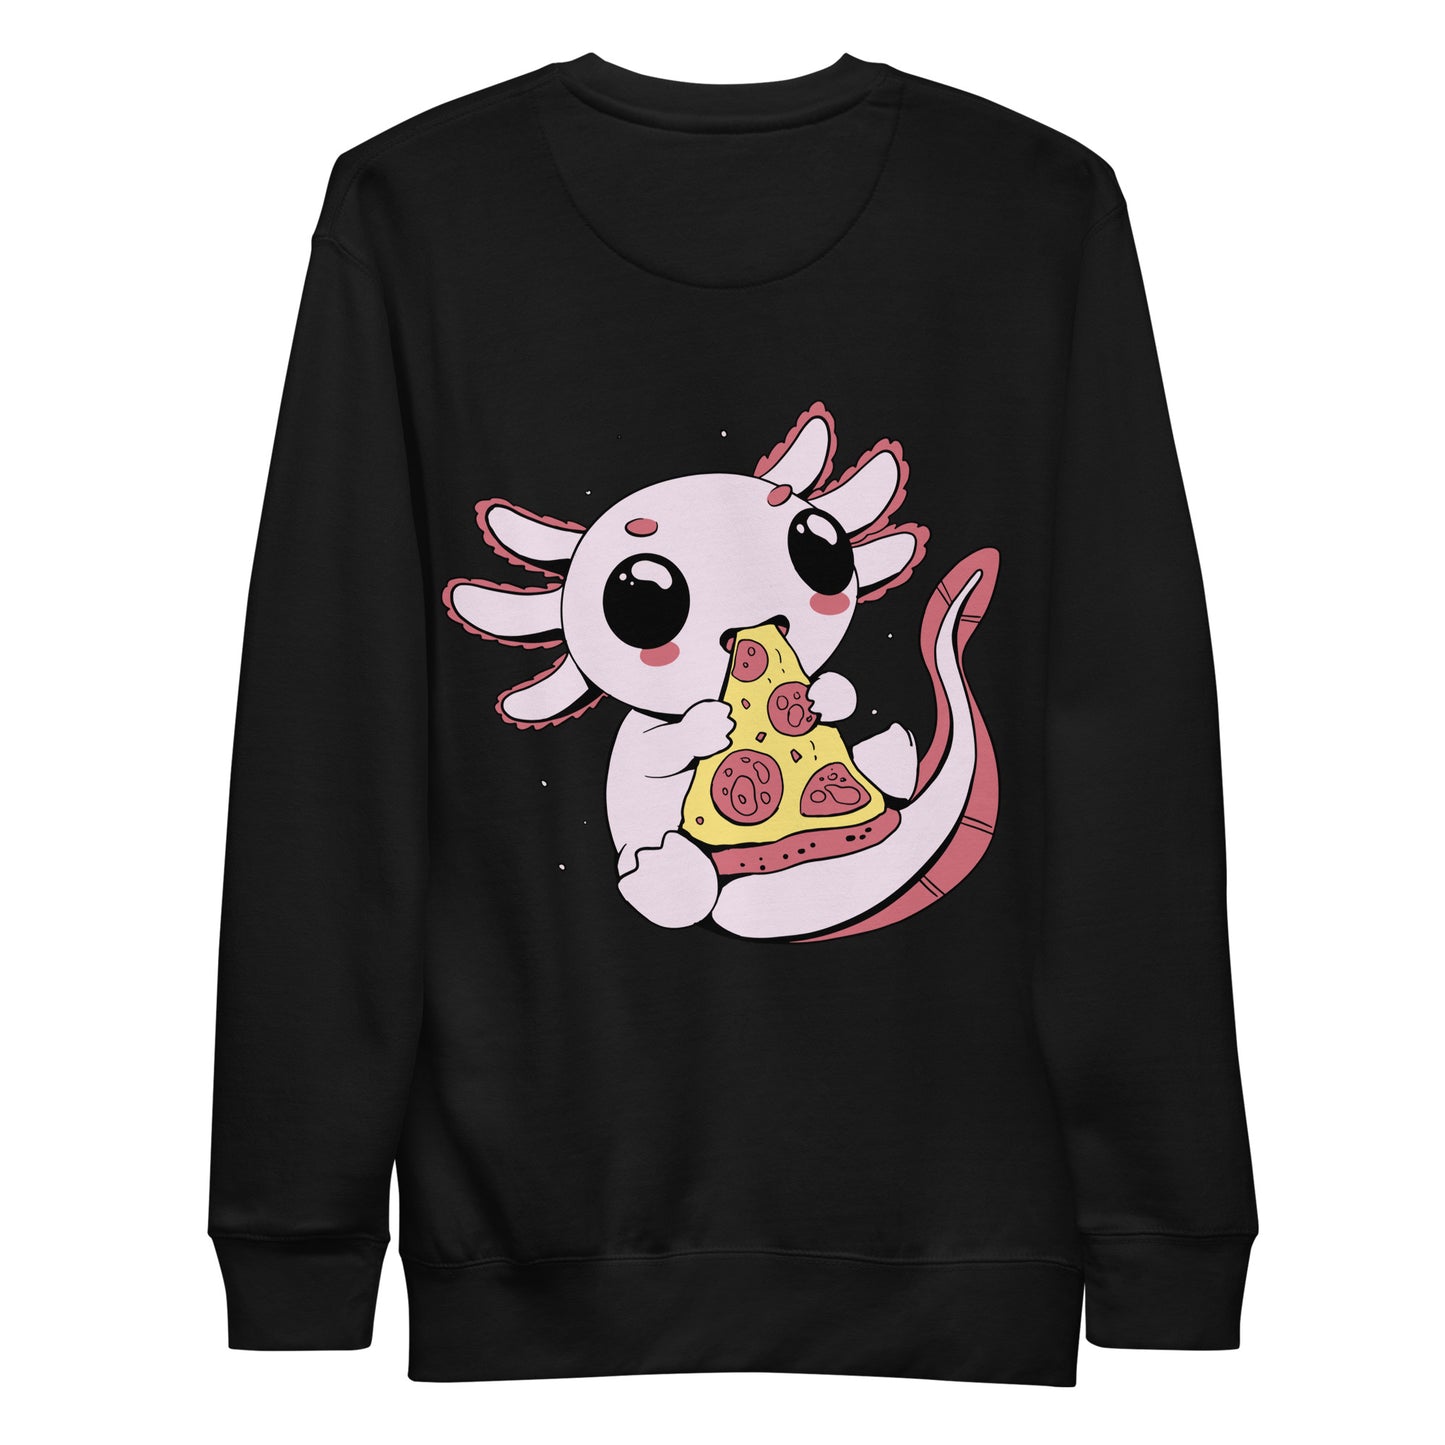 Cute axolotl eating pizza | Unisex Premium Sweatshirt - F&B